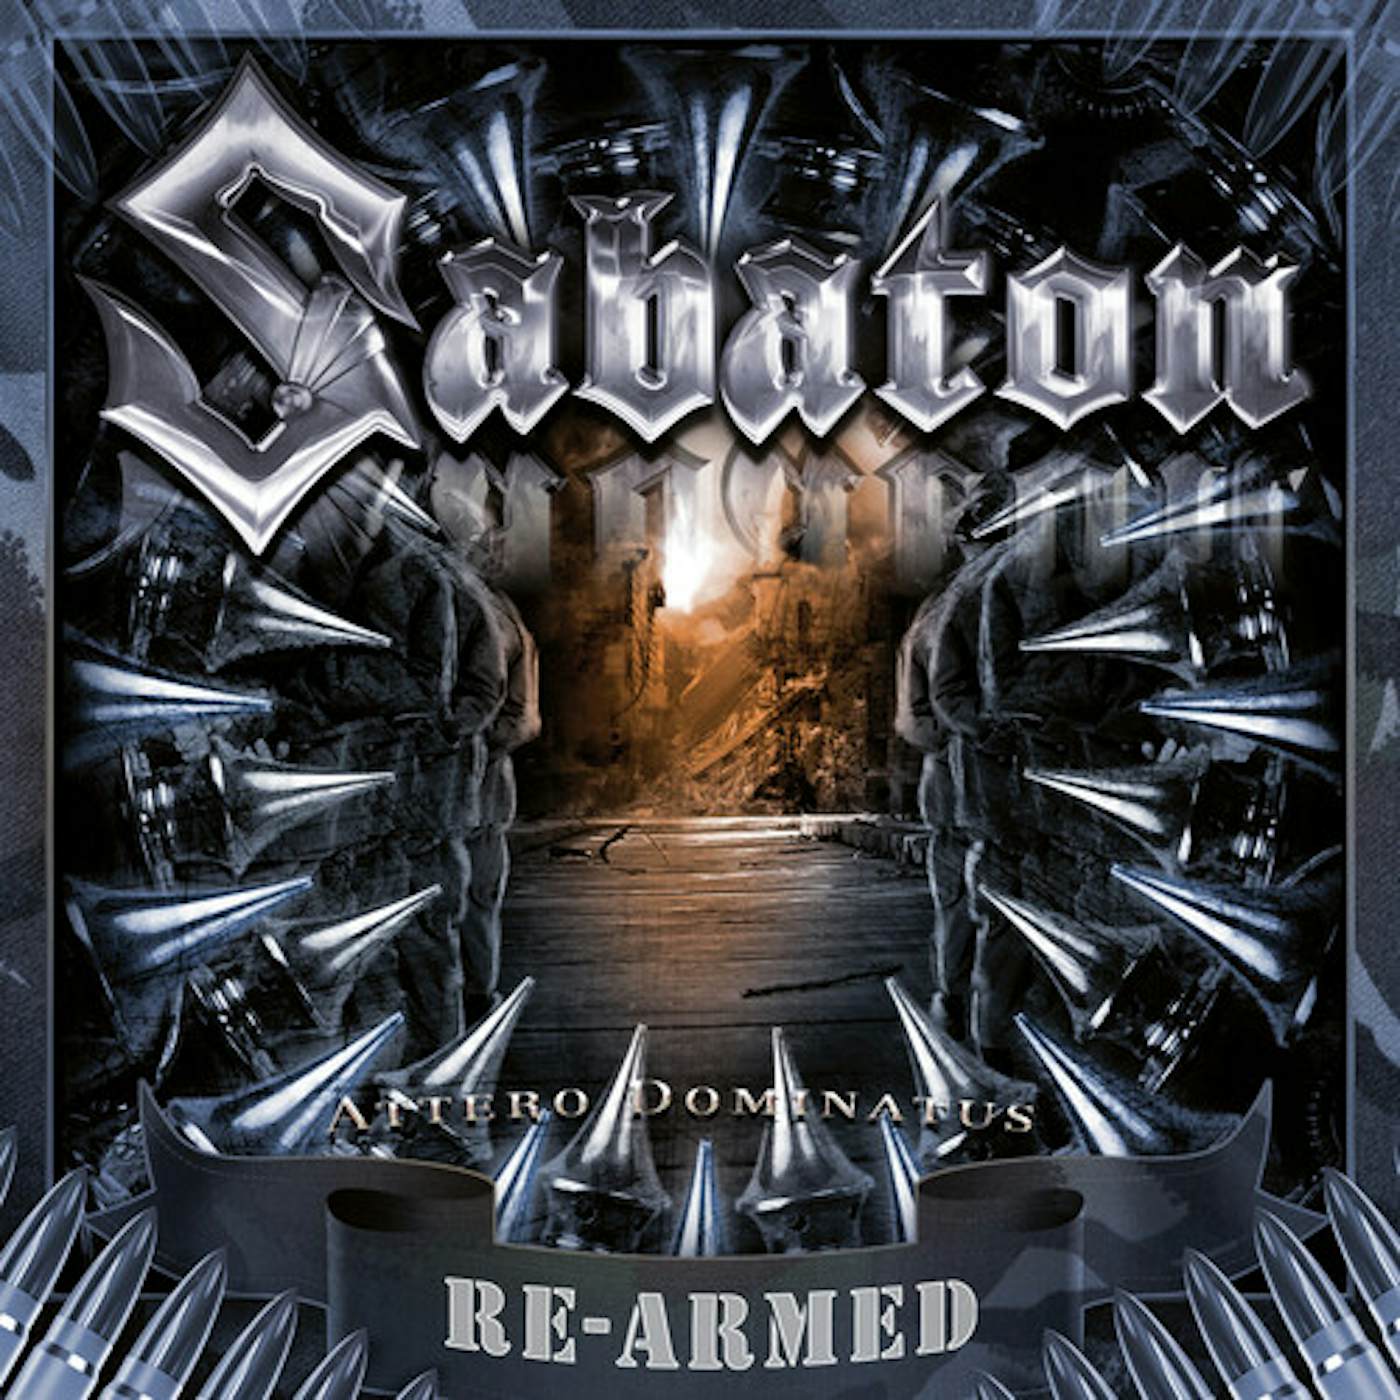 Sabaton ATTERO DOMINATUS RE-ARMED - BLACK Vinyl Record